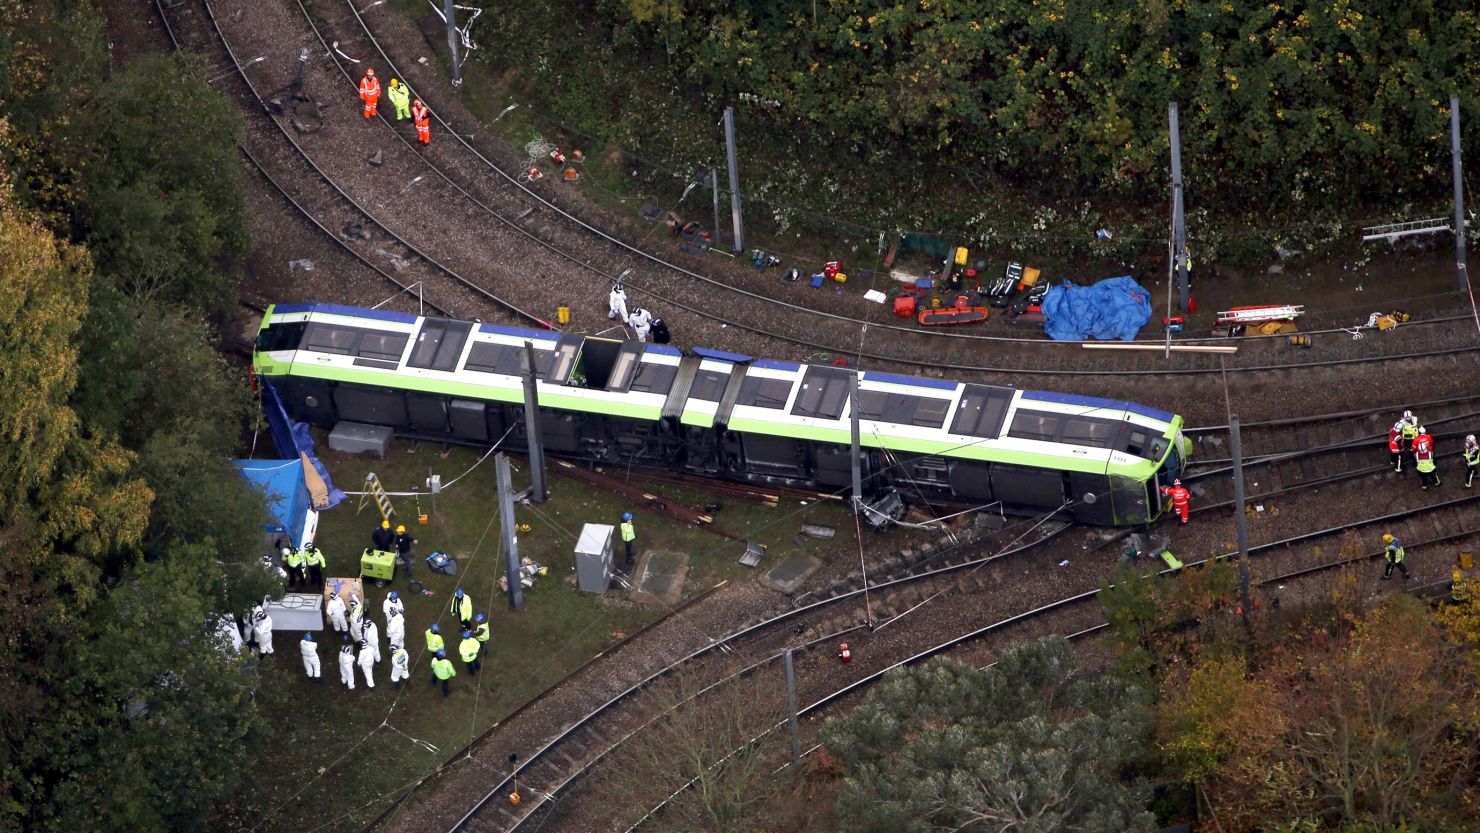 Aerial view of the tram derailment Tram overturns in Croydon, London, UK - 09 Nov 2016 (Rex Features via AP Images)